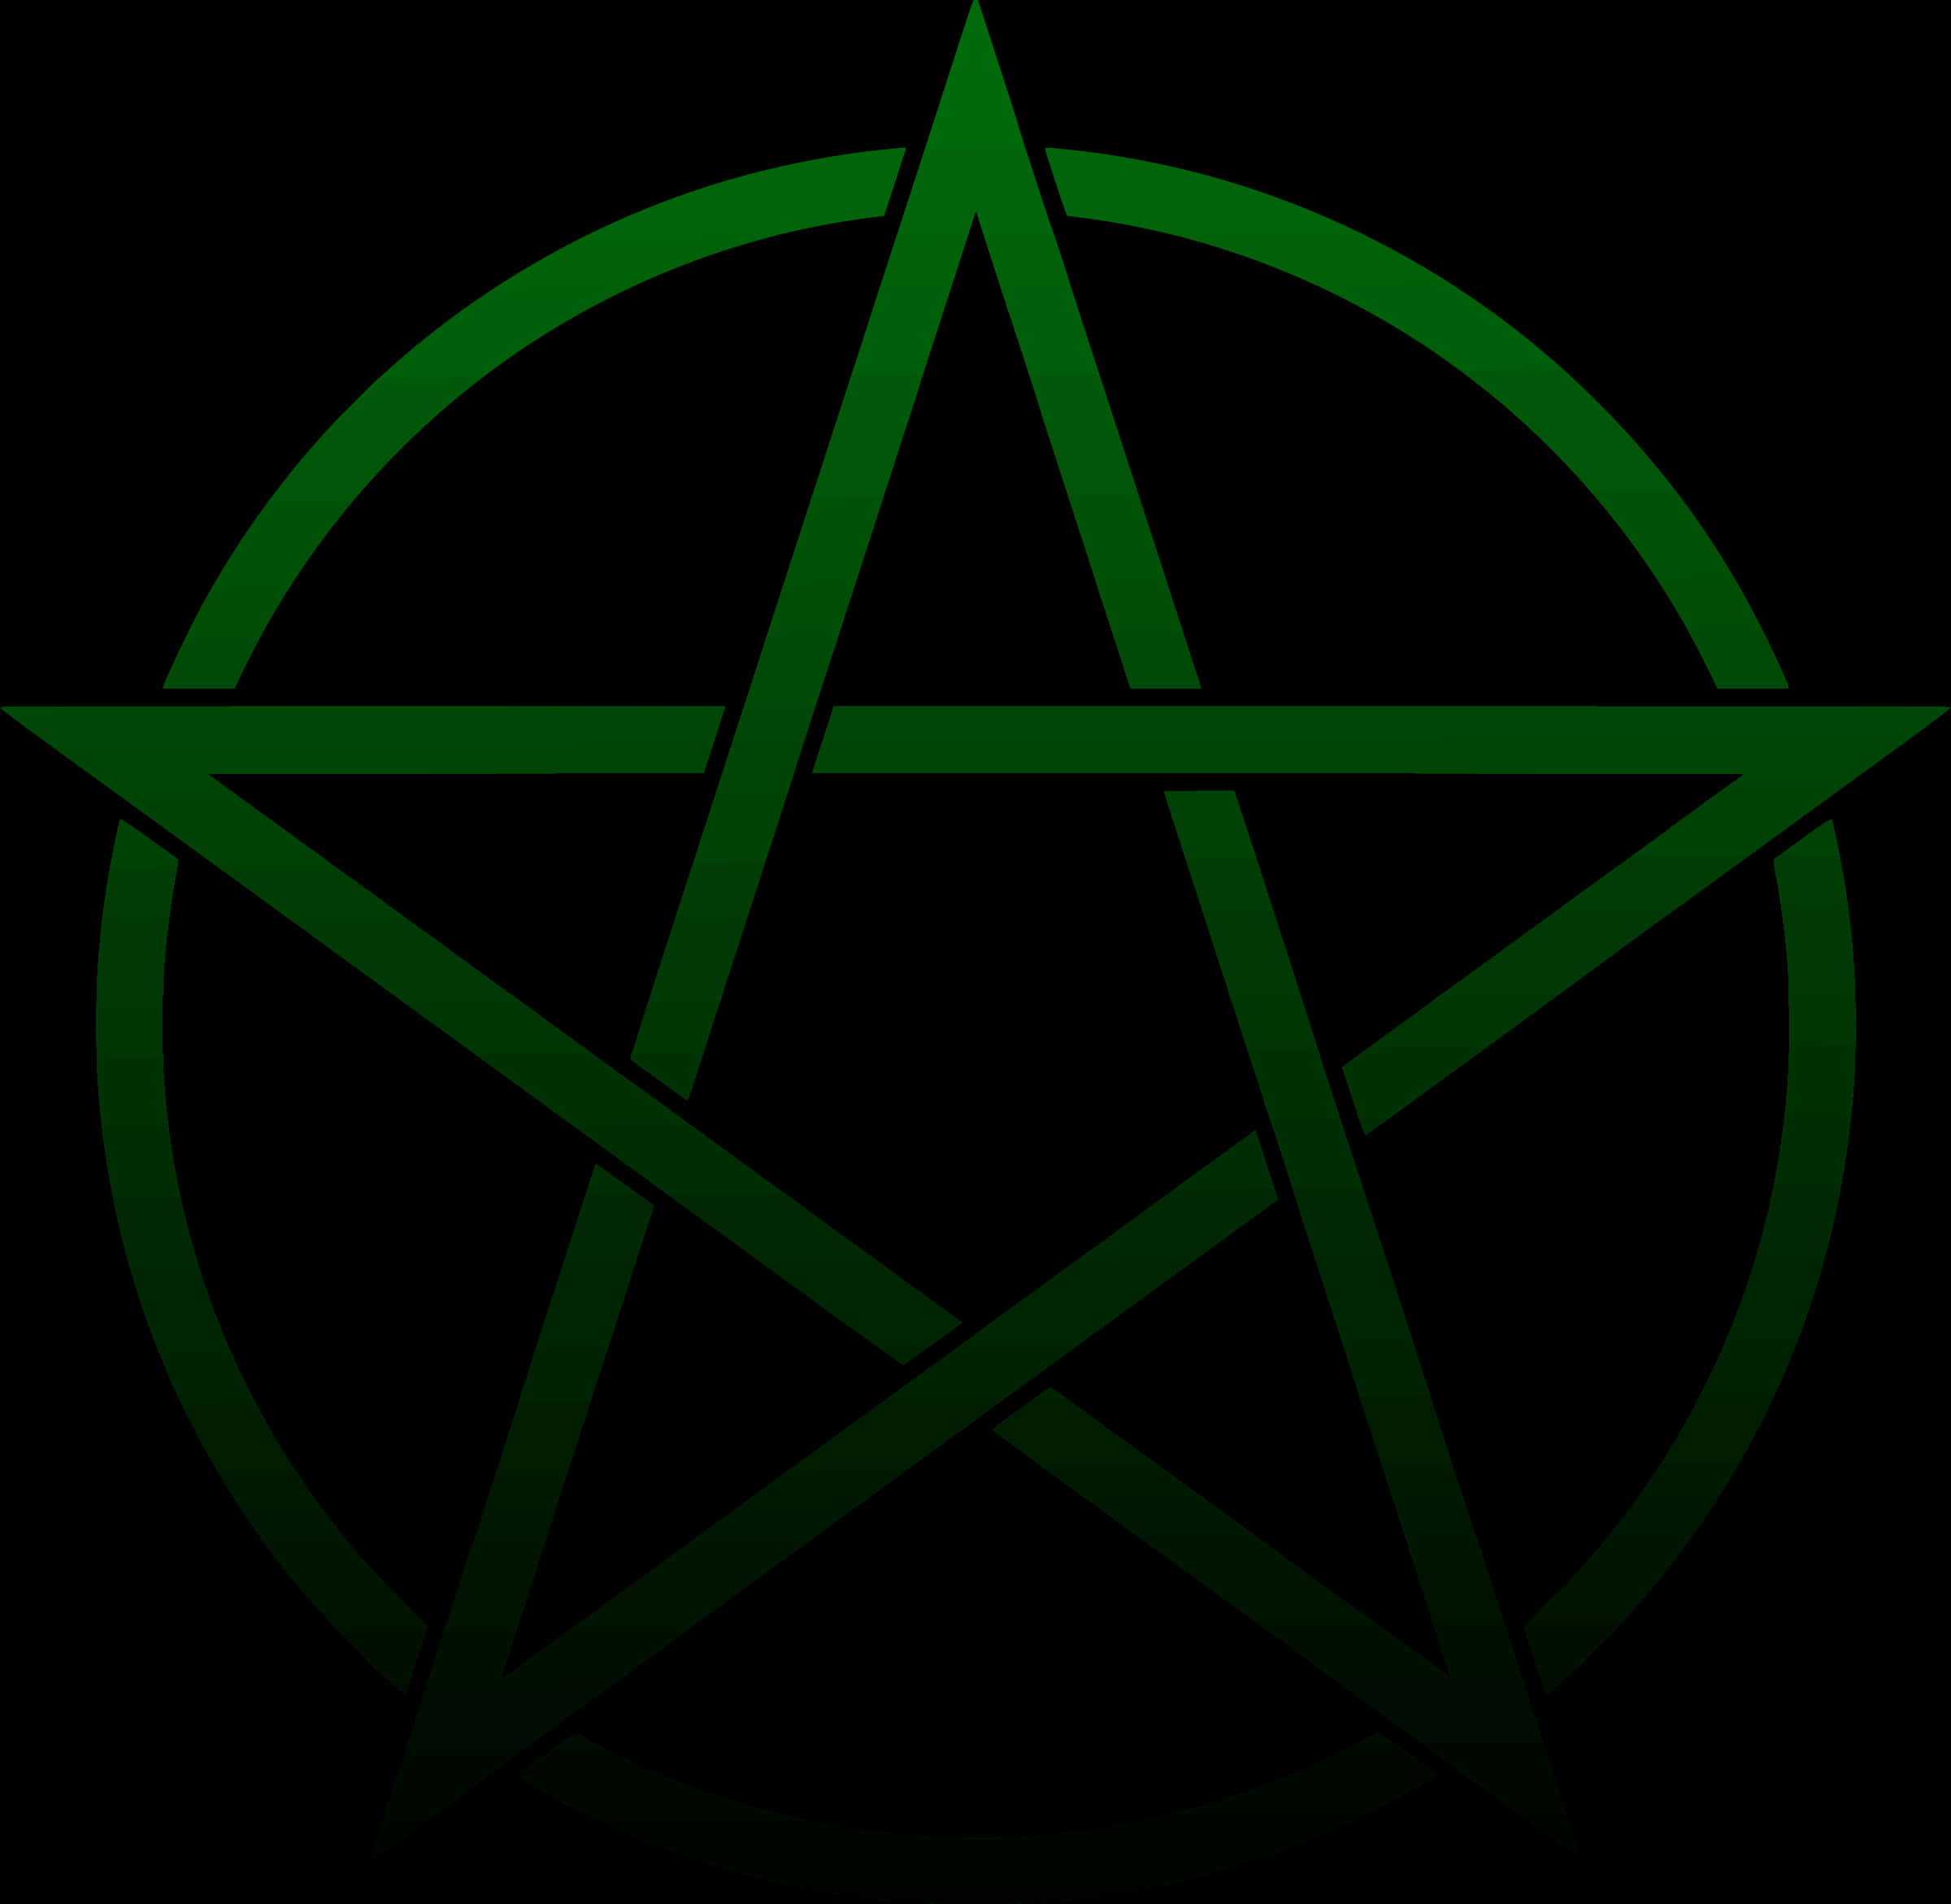 Green Pentagramon Black Background PNG image